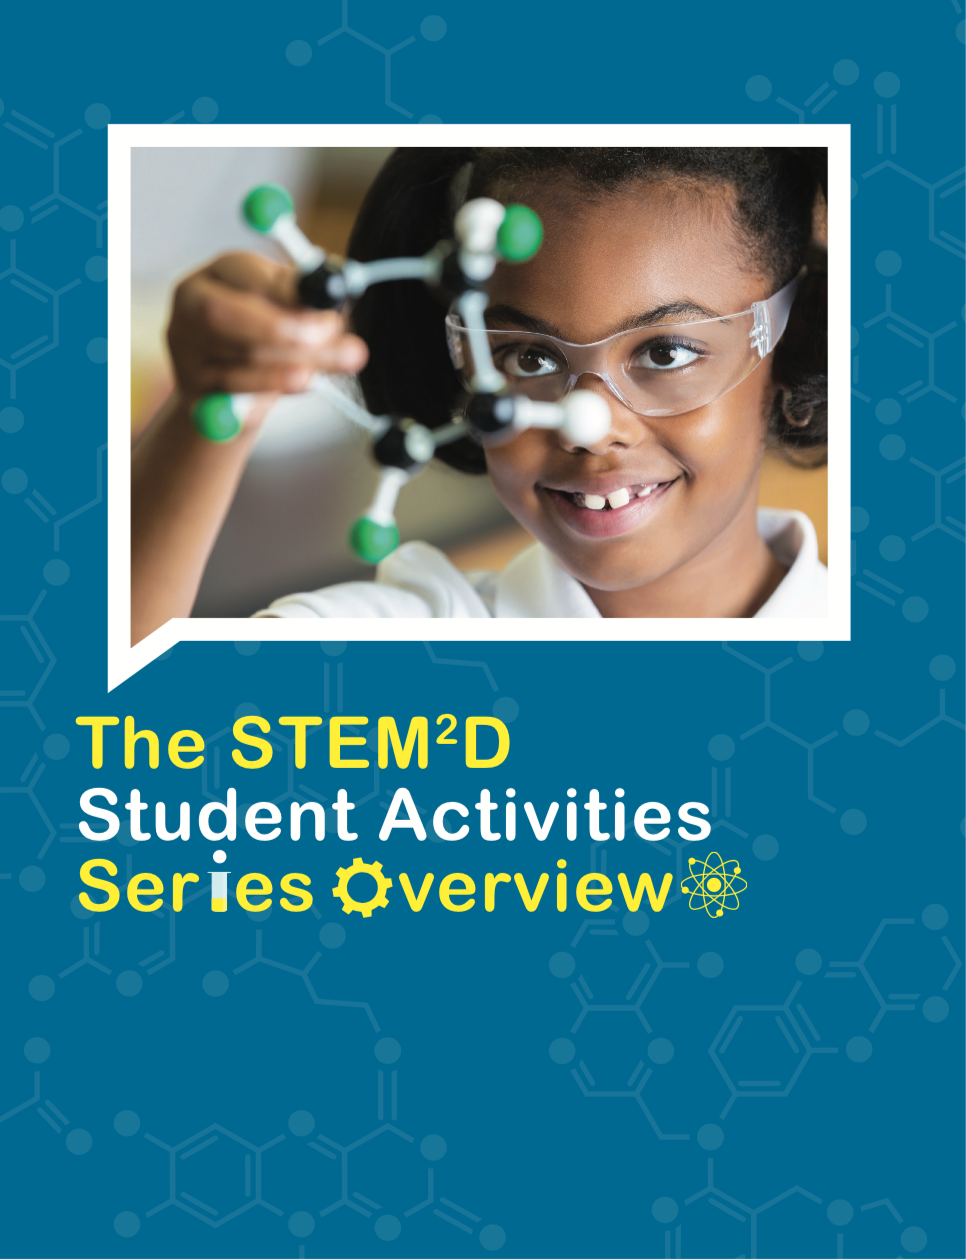 STEM2D Student Activities Overview